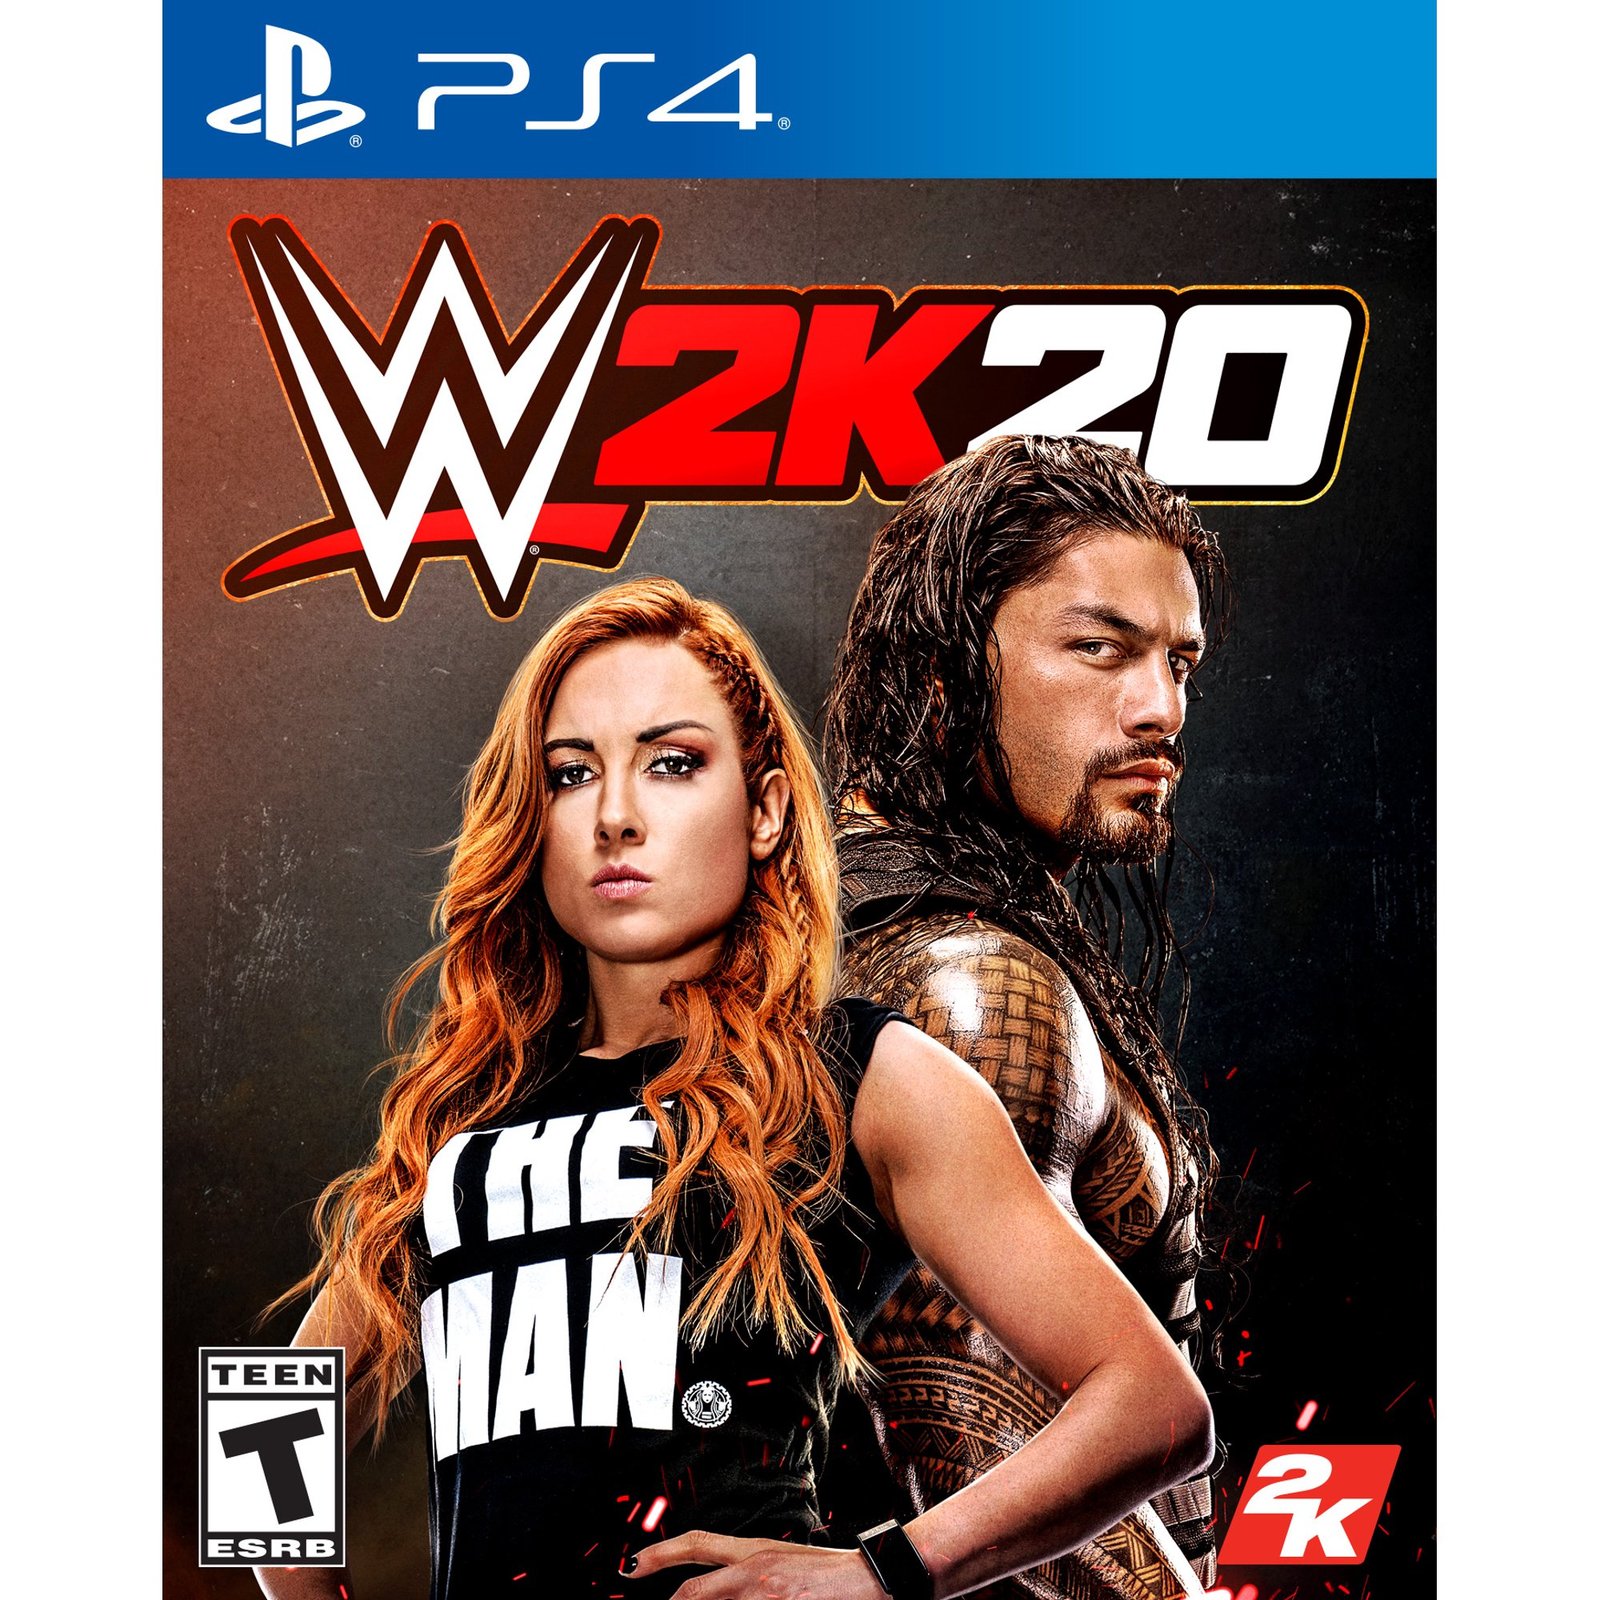 Wwe 2K20 standard edition playstation 4 2K wrestling video games ps4 (brand new)